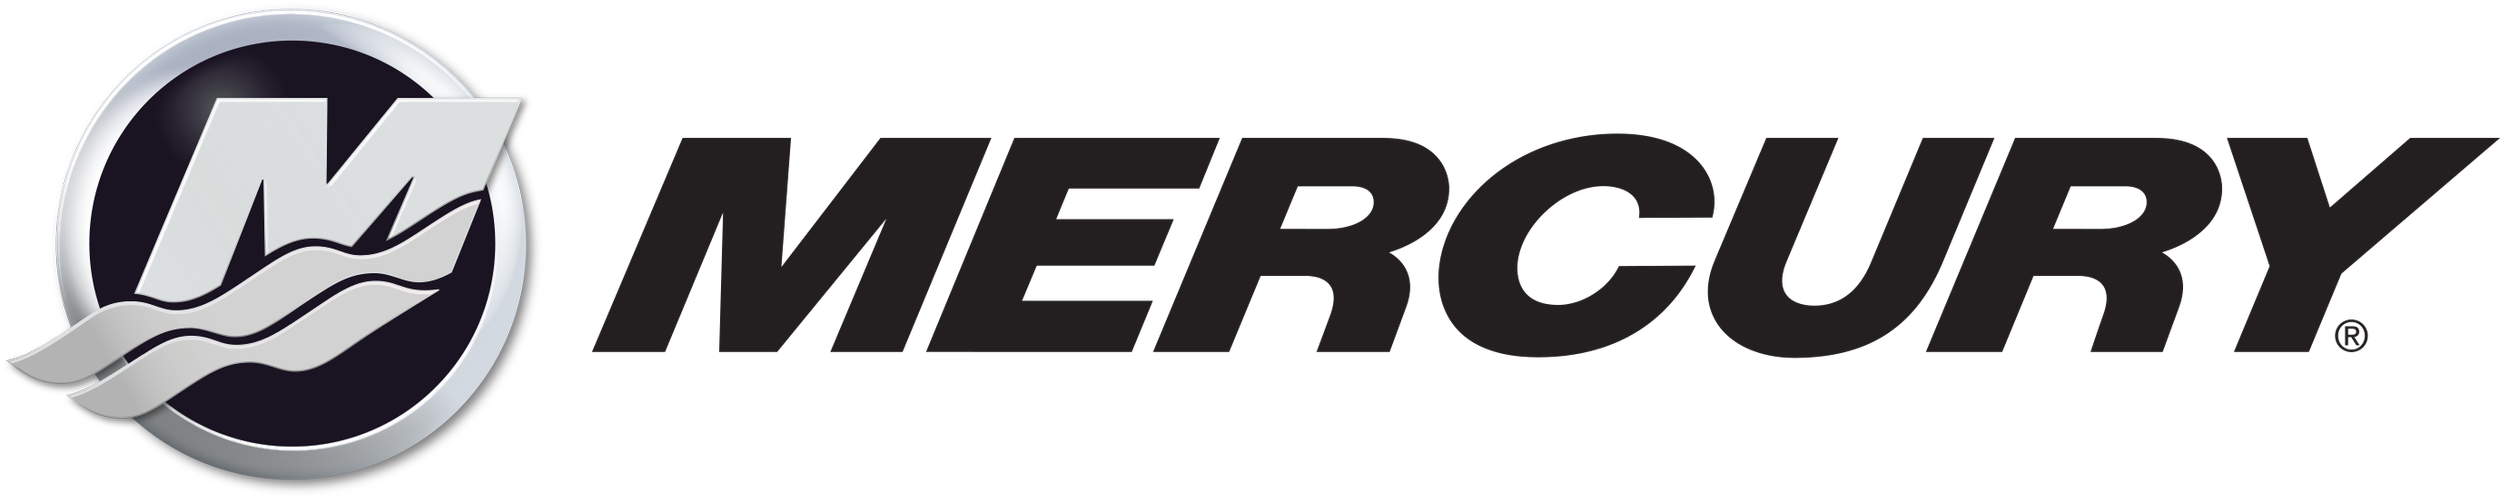 mercury-marine-logo.png